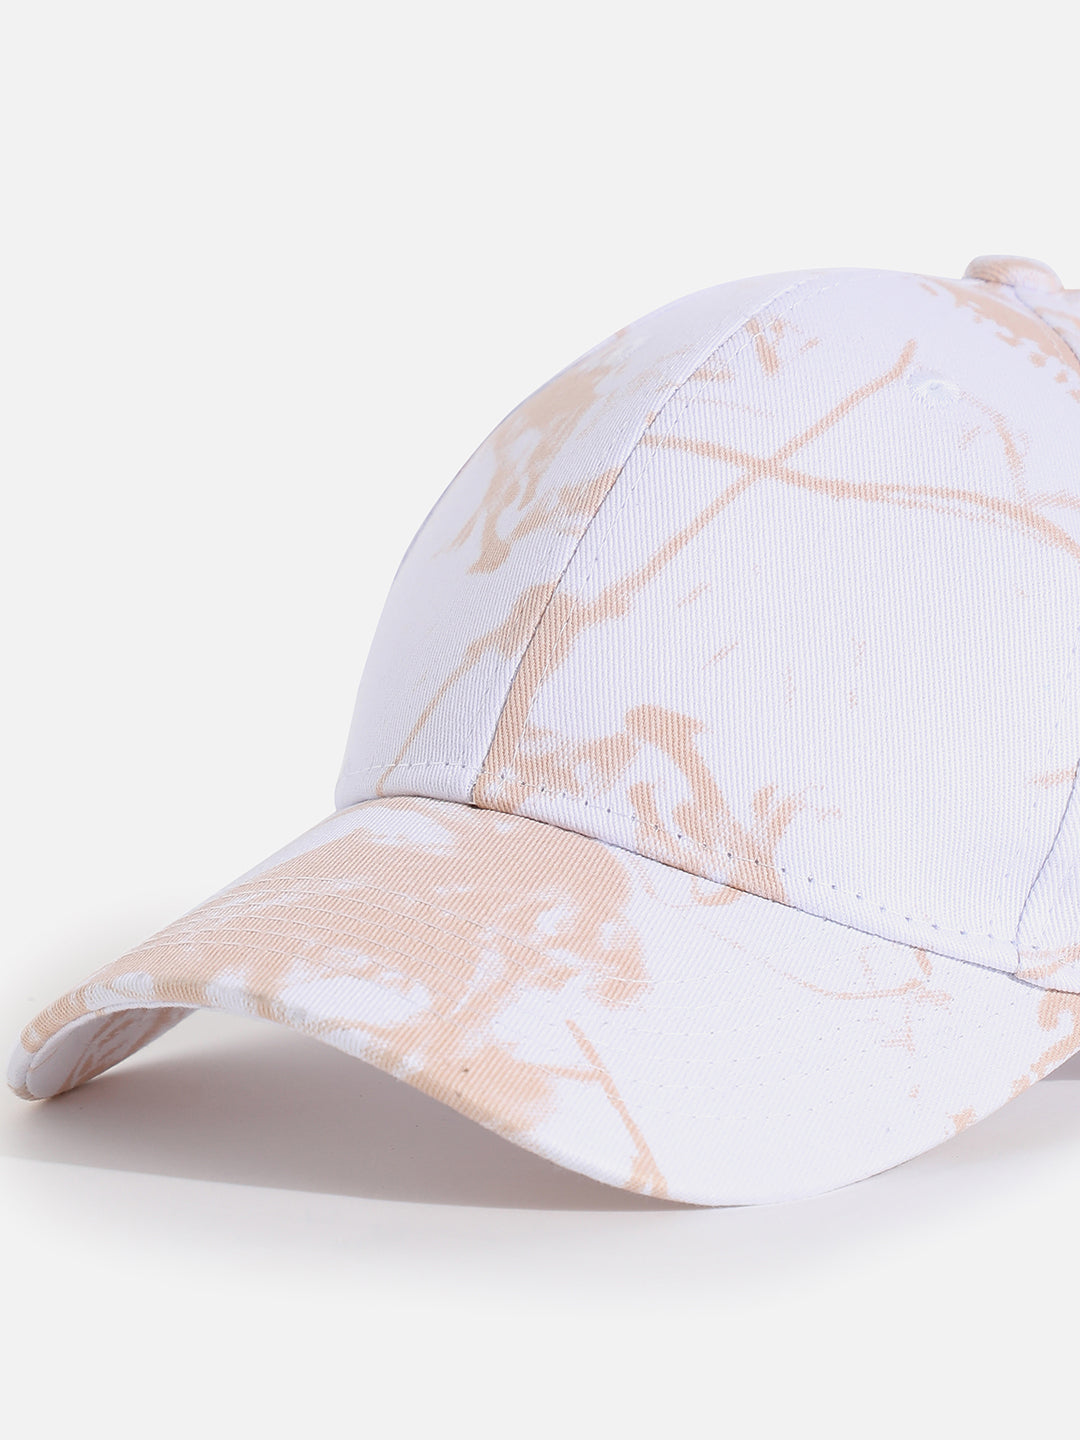 White & Beige Tie-Dye Textured Baseball Cap